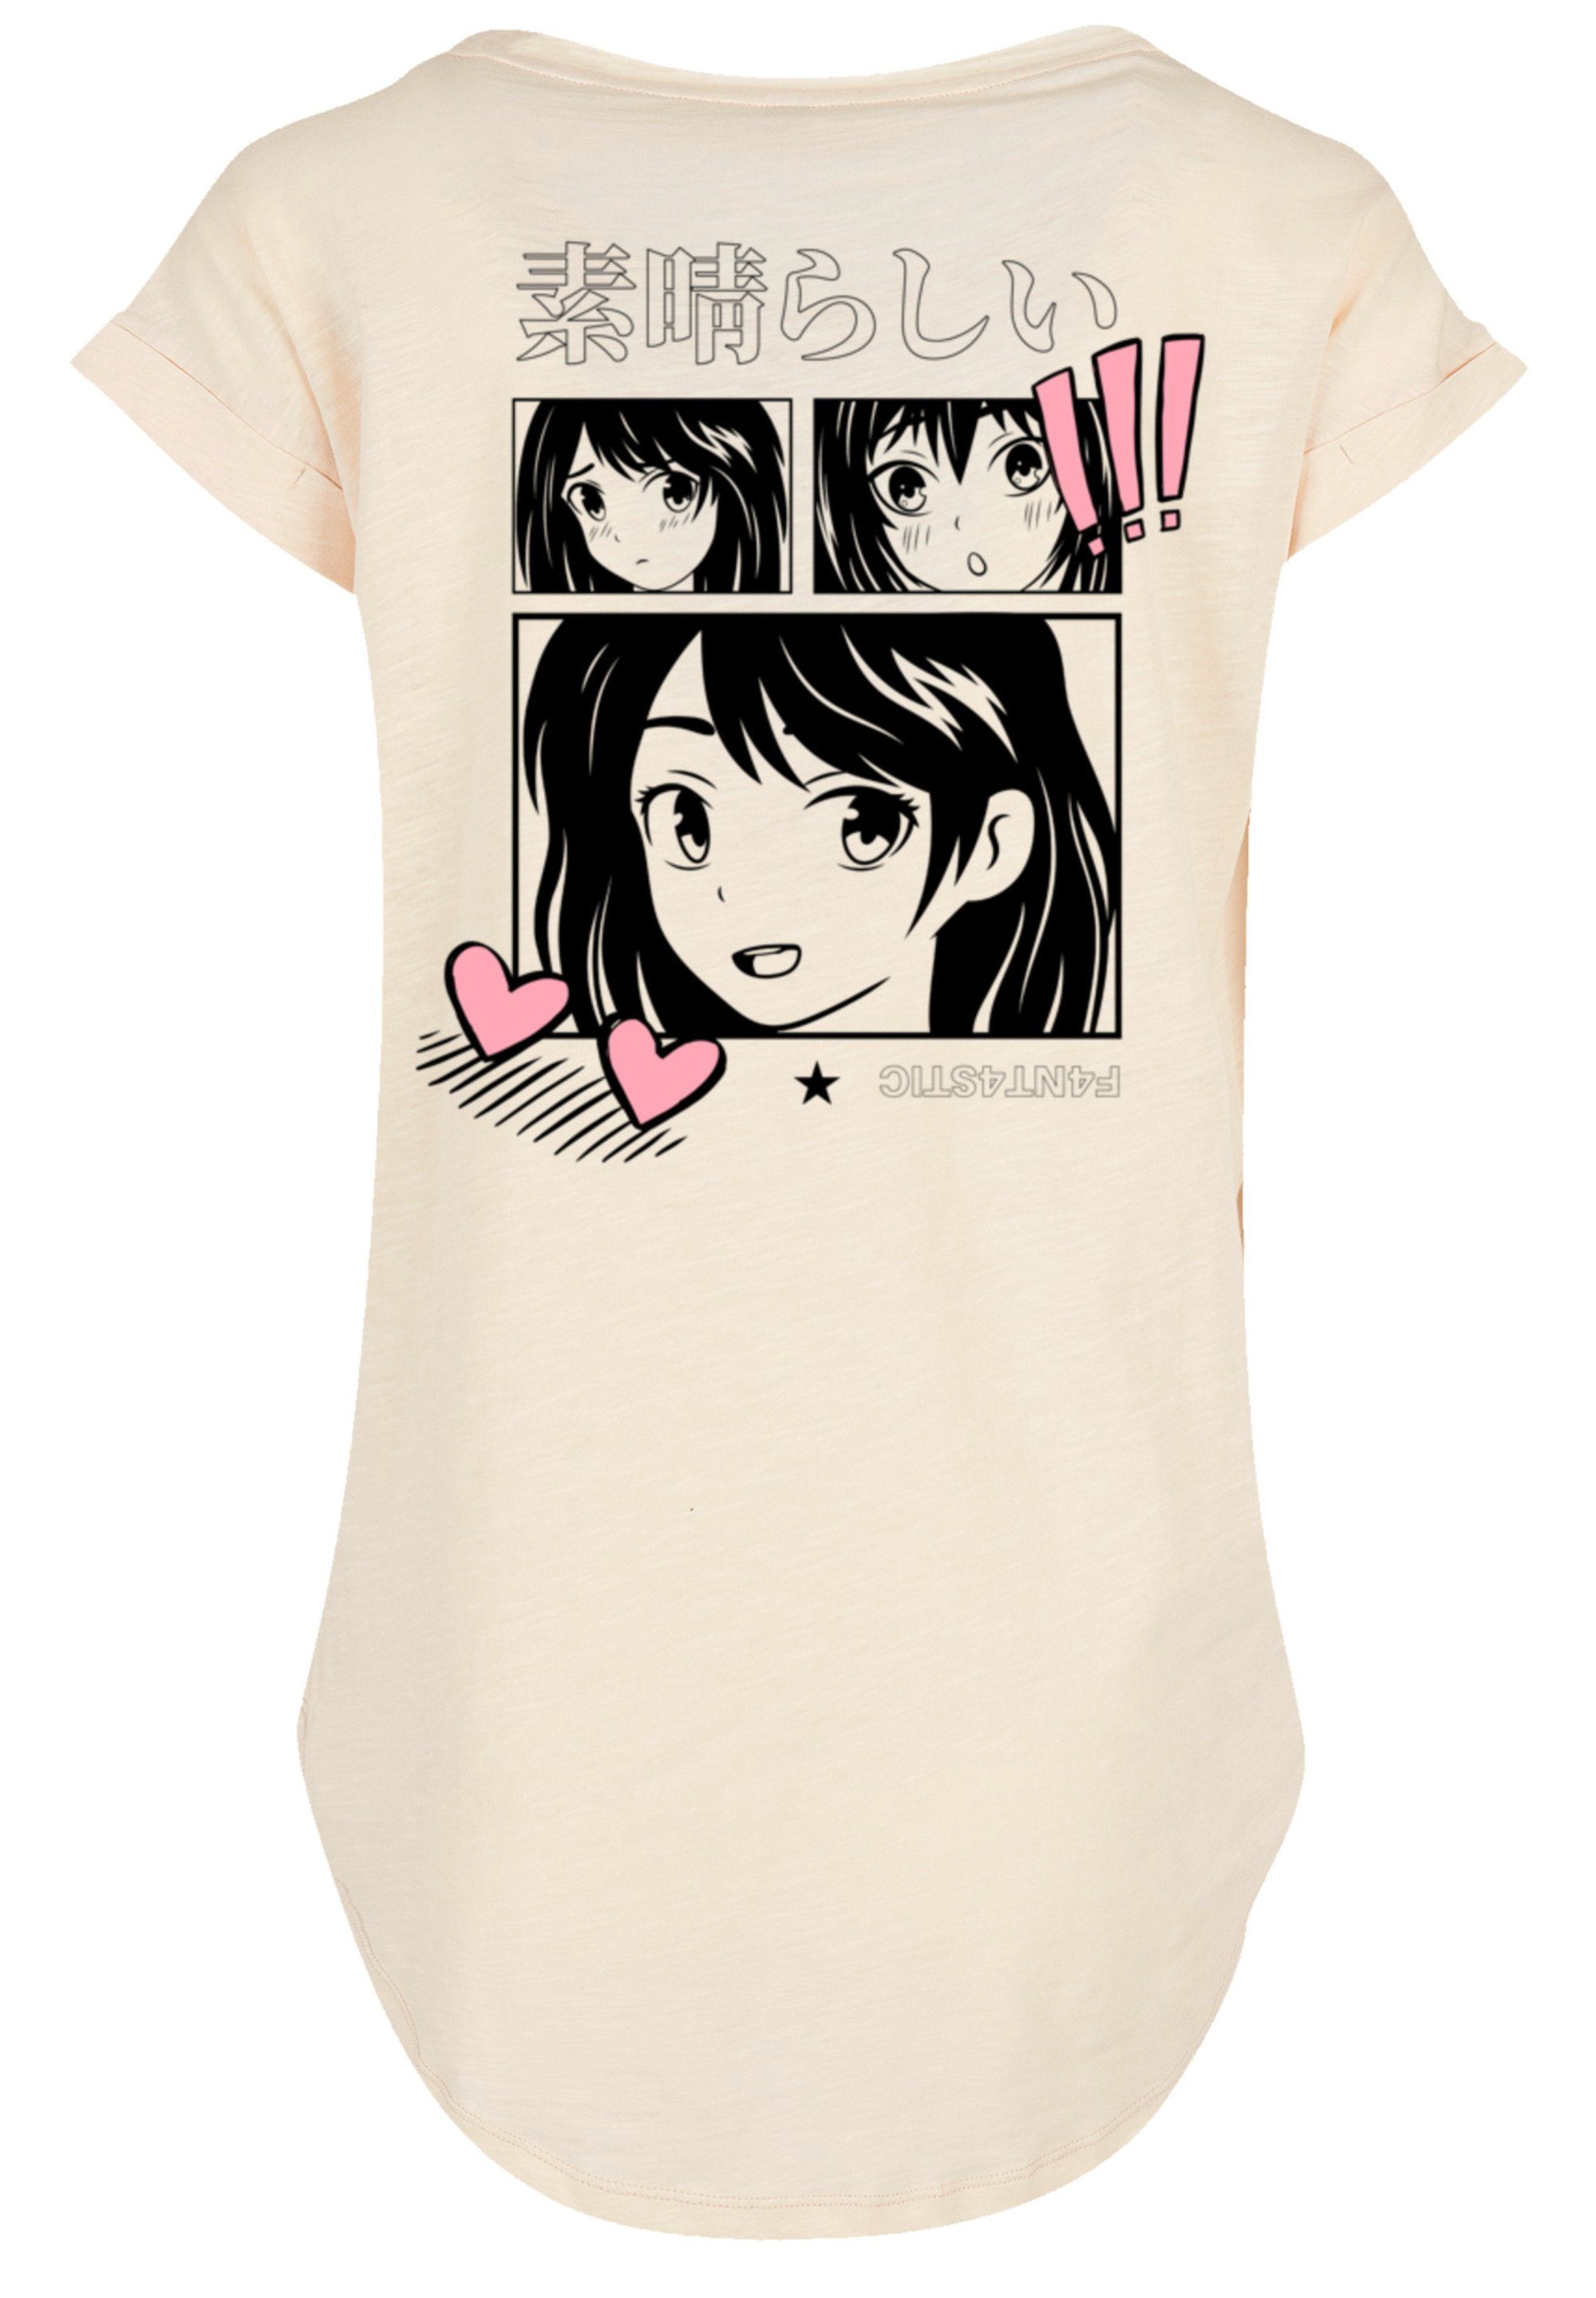 F4NT4STIC T-Shirt Manga Anime Japan Print Grafik Whitesand